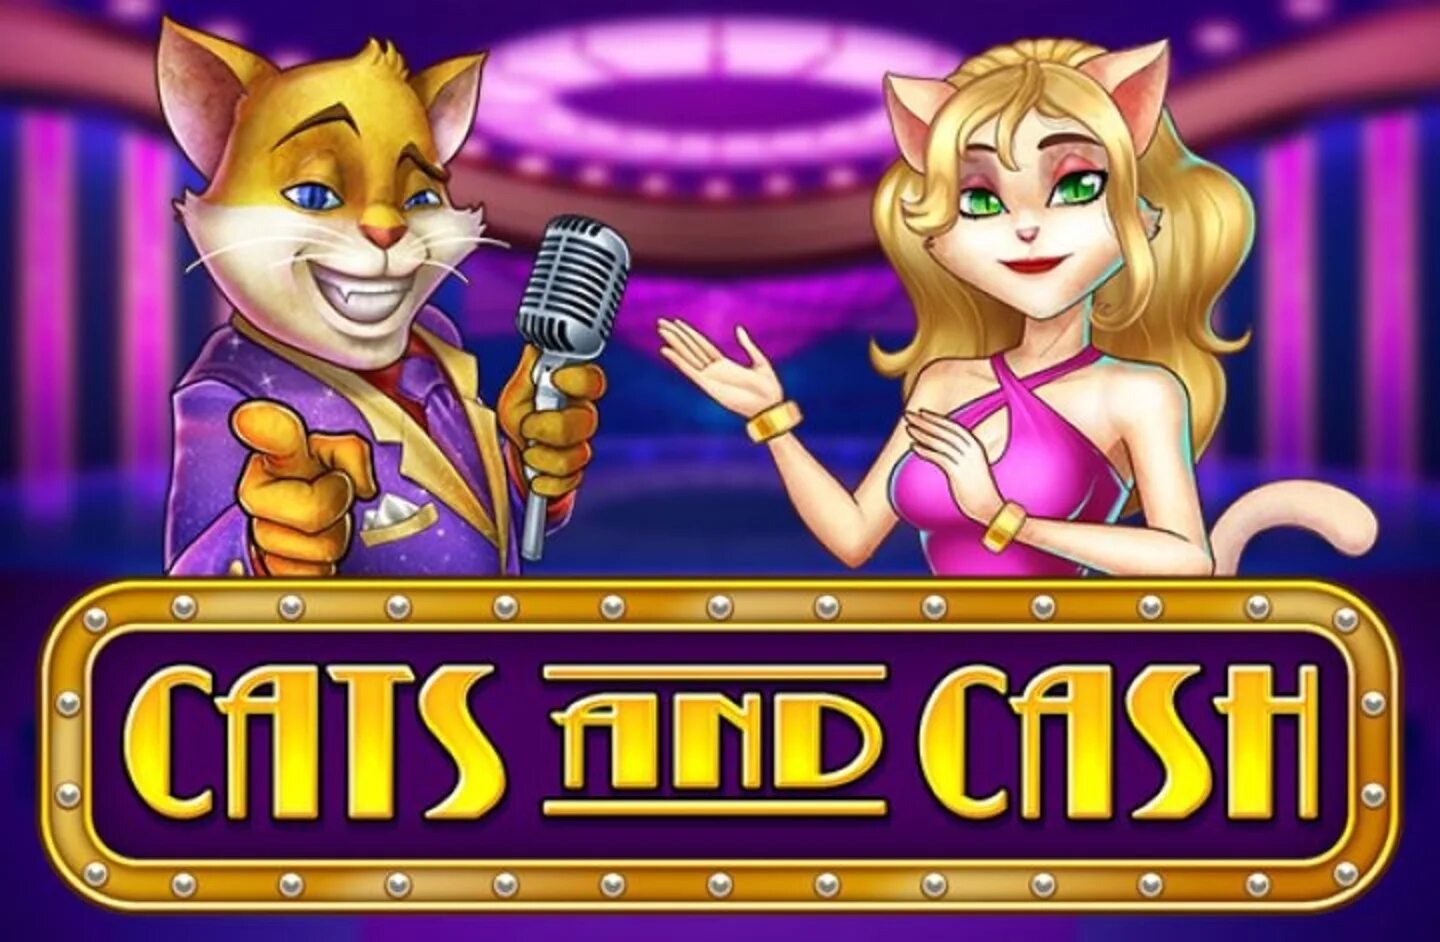 Casino cat official money cat fun. Playn go слоты. Кэш Кэт. Cats and Cash Slot. Слот с кошками.